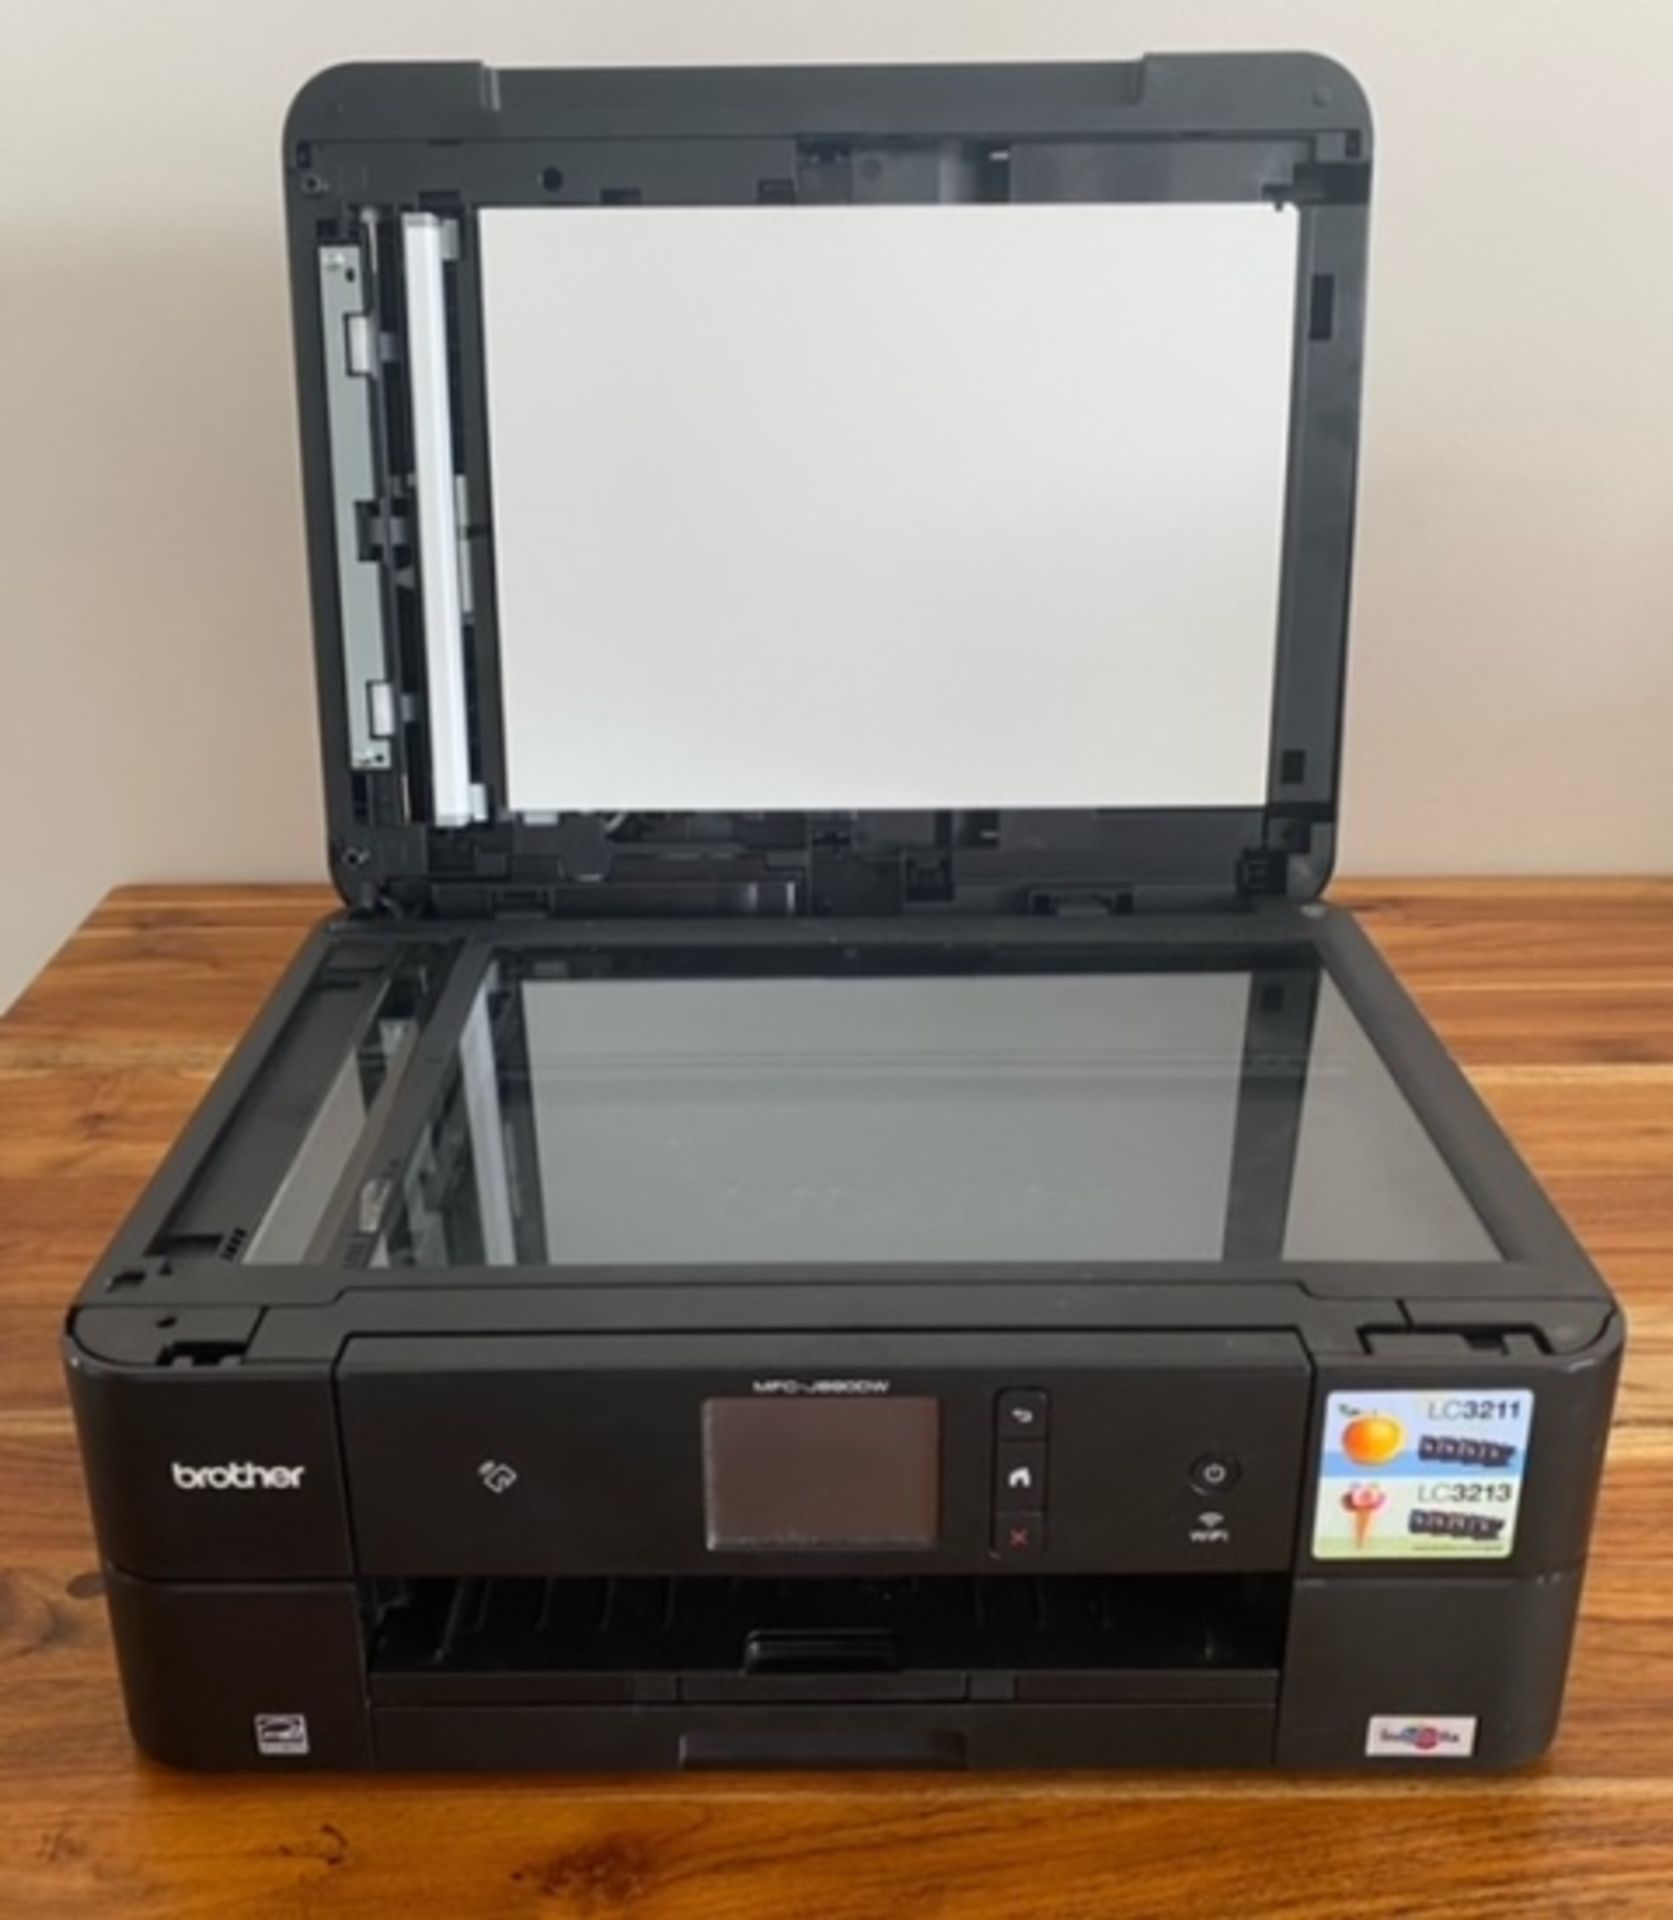 Brother Printer model MFC-J890DW - Image 2 of 3